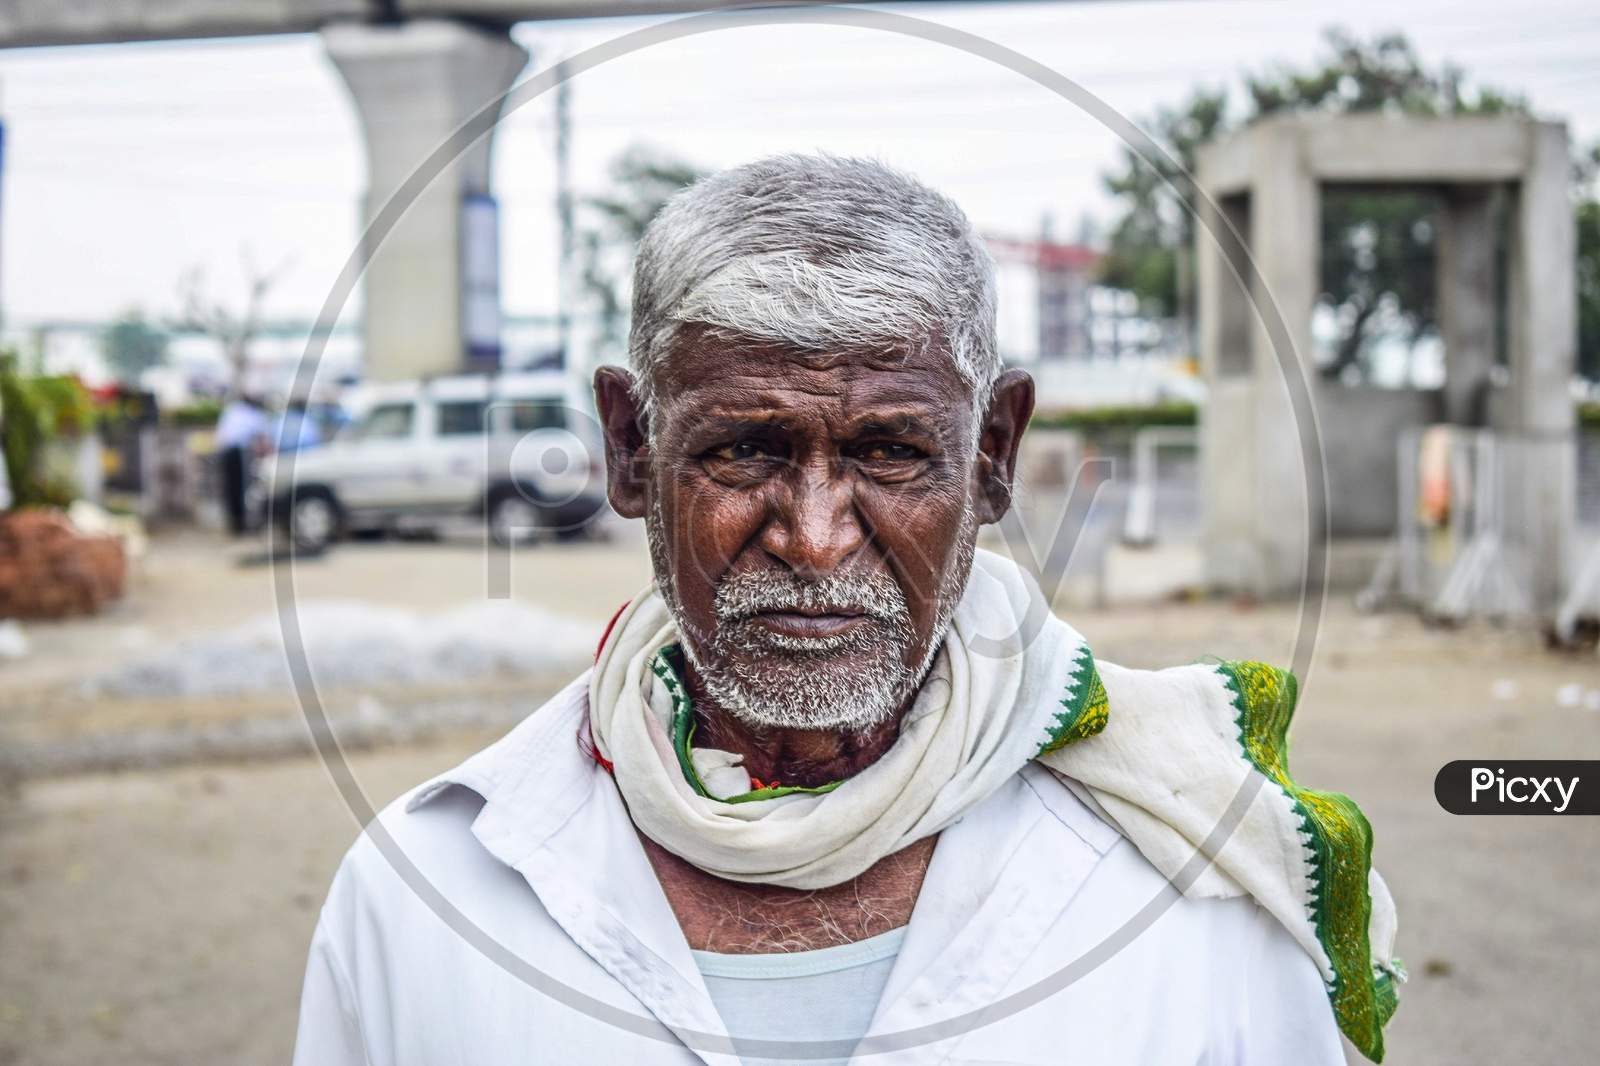 An old man on a street